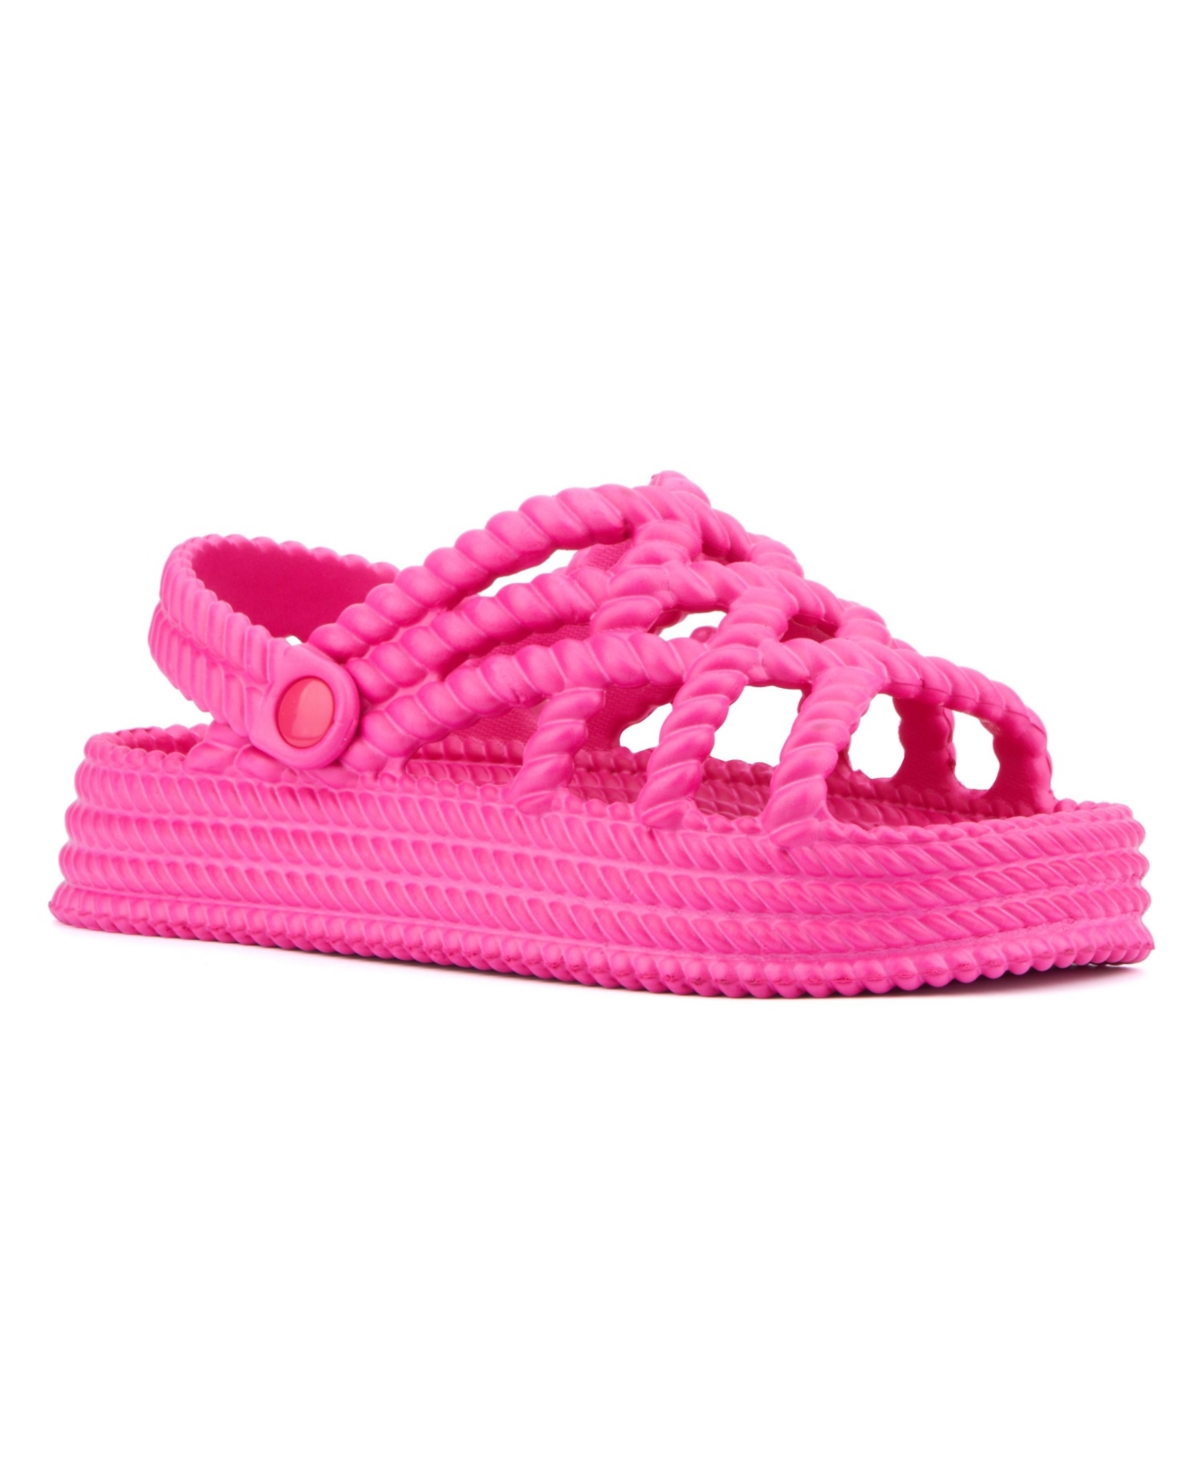 Women's Jazzy Platform Sandal - Hot pink